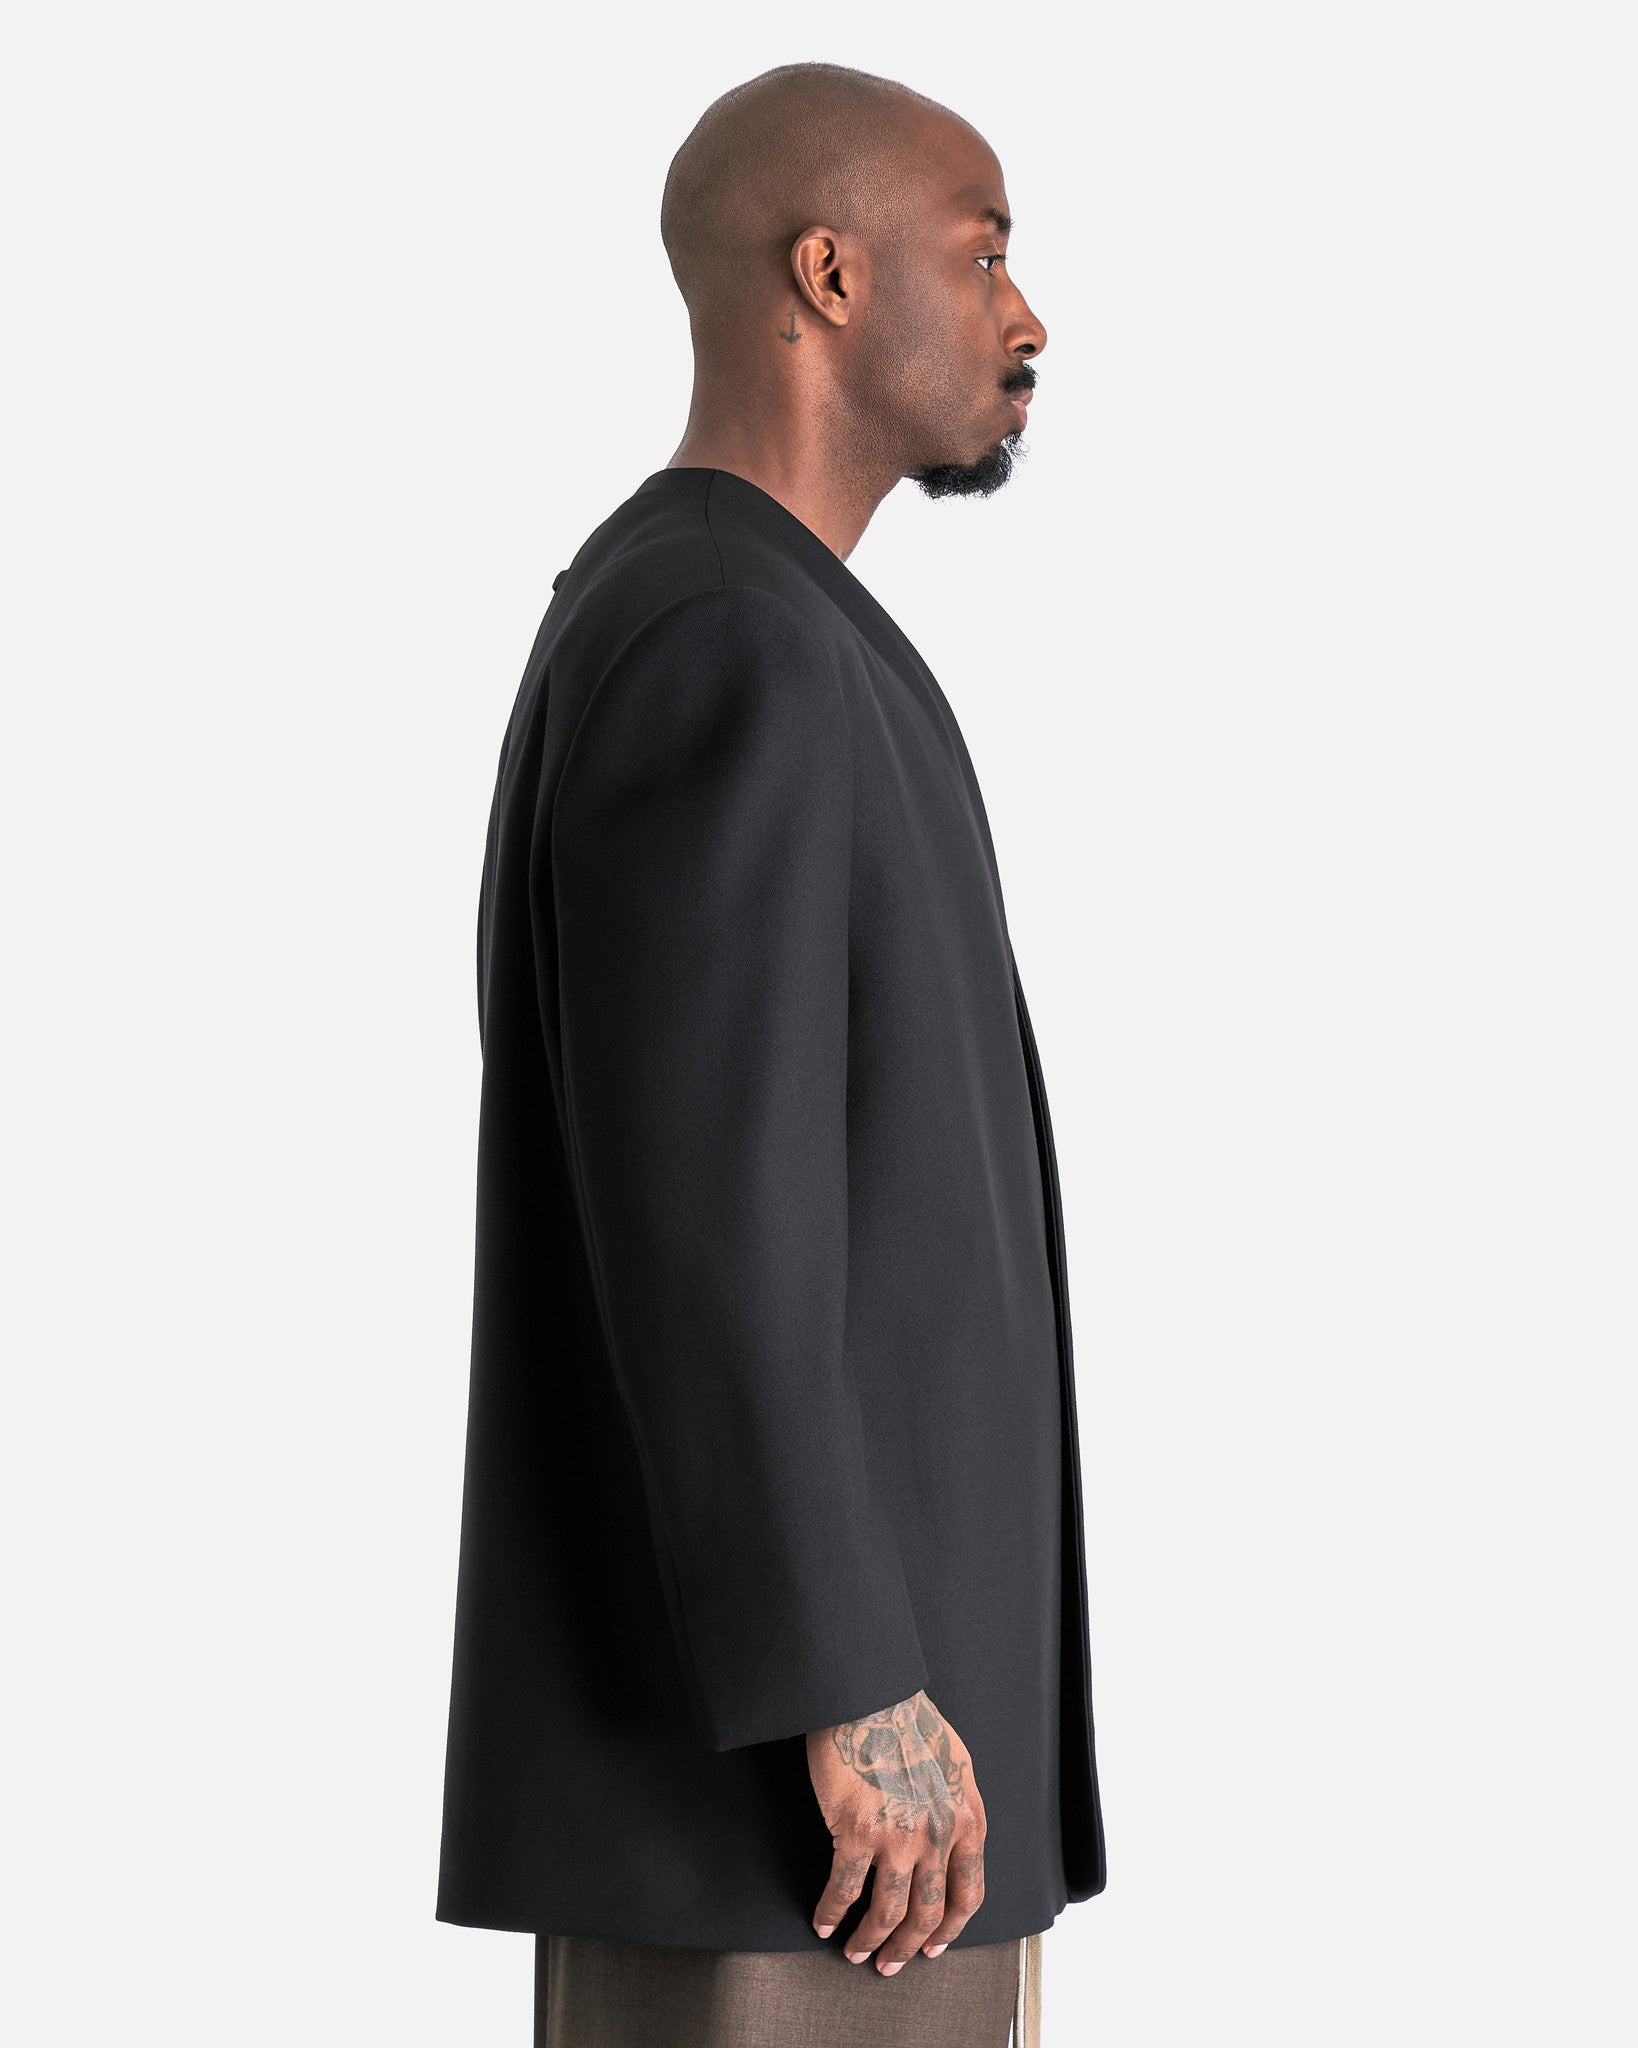 Fear of God Men's Jackets Lapelless Suit Jacket in Black